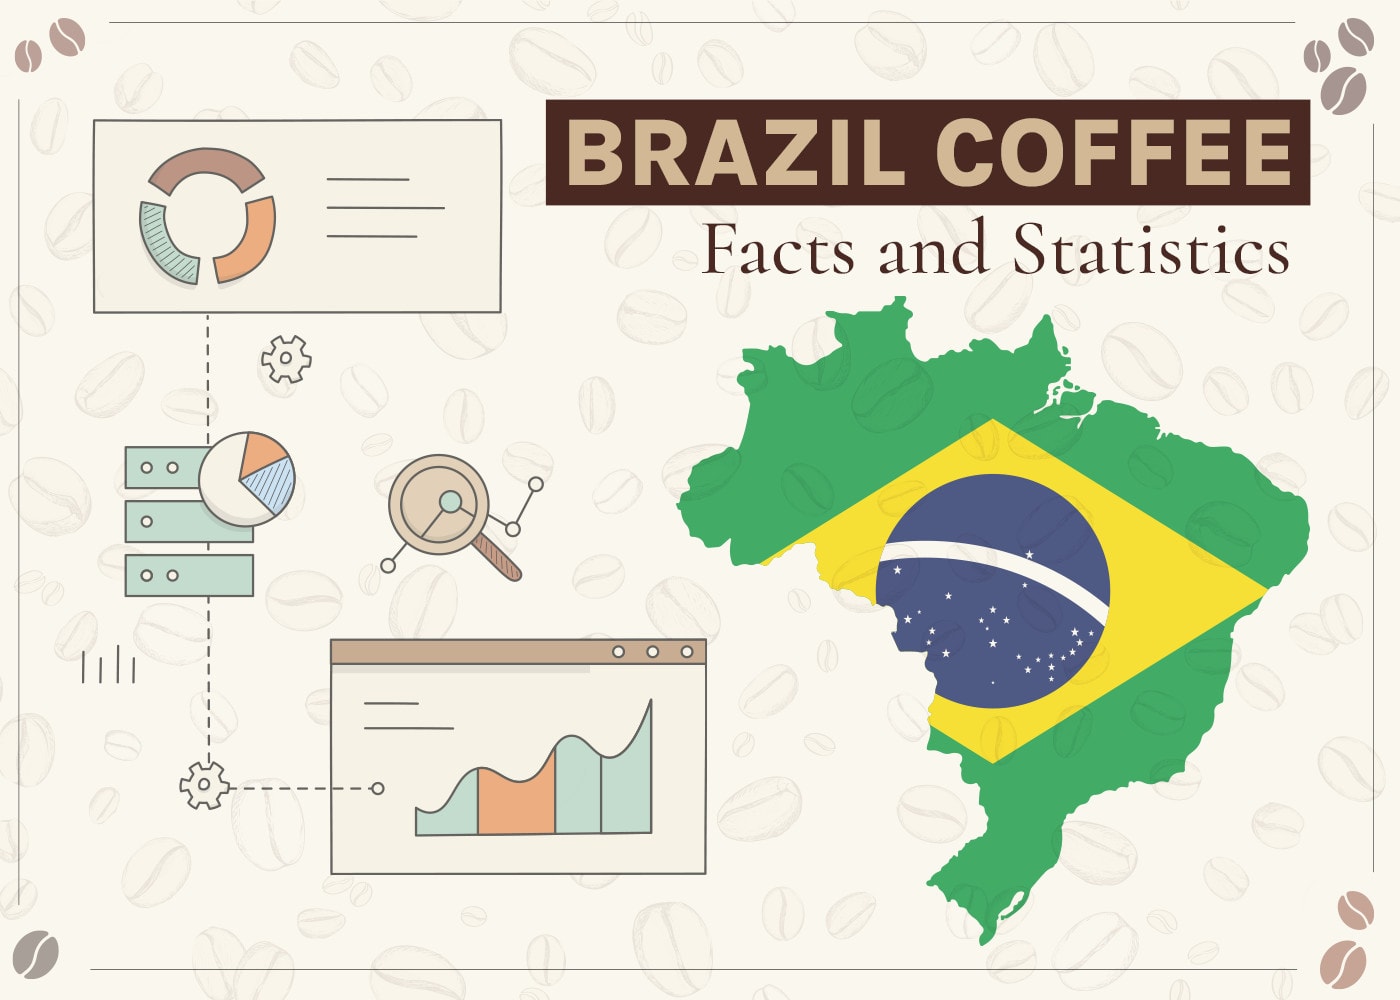 Brazil Coffee Production Statistics to Know